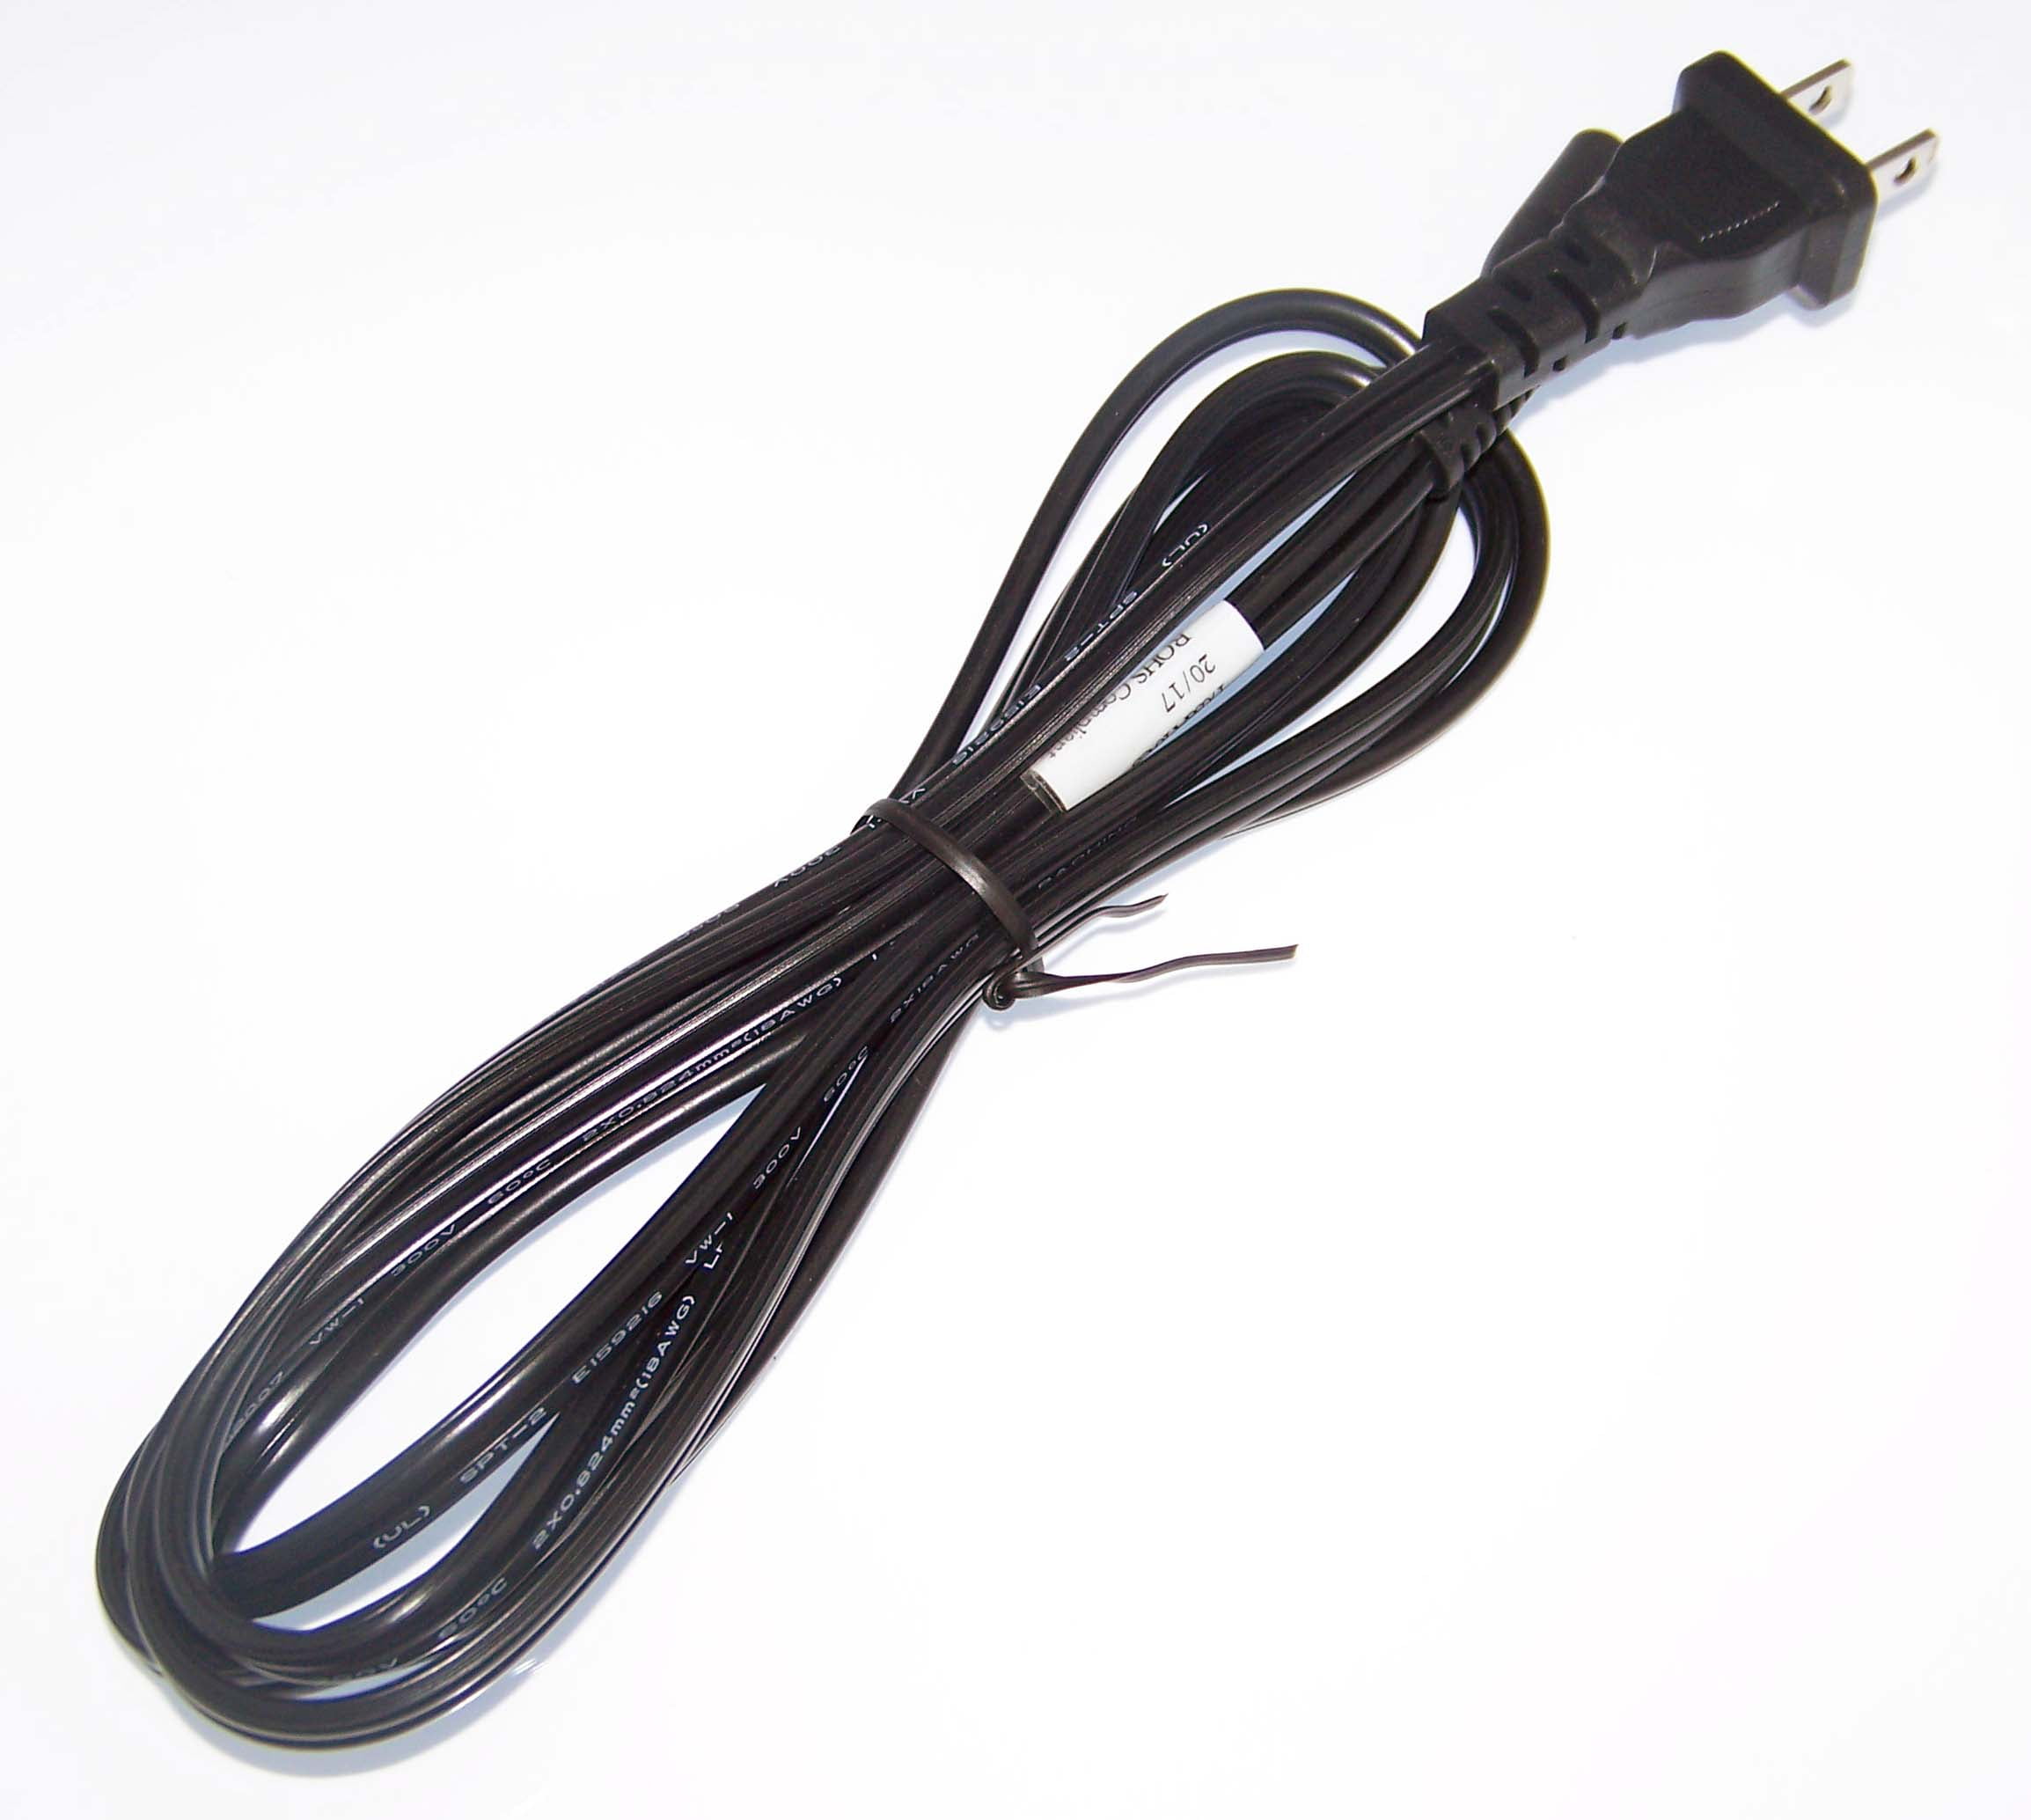 USB Cable Cord for Epson WorkForce WF-2610 WF-2860 XP-30 XP-640 XP-960 Printer 